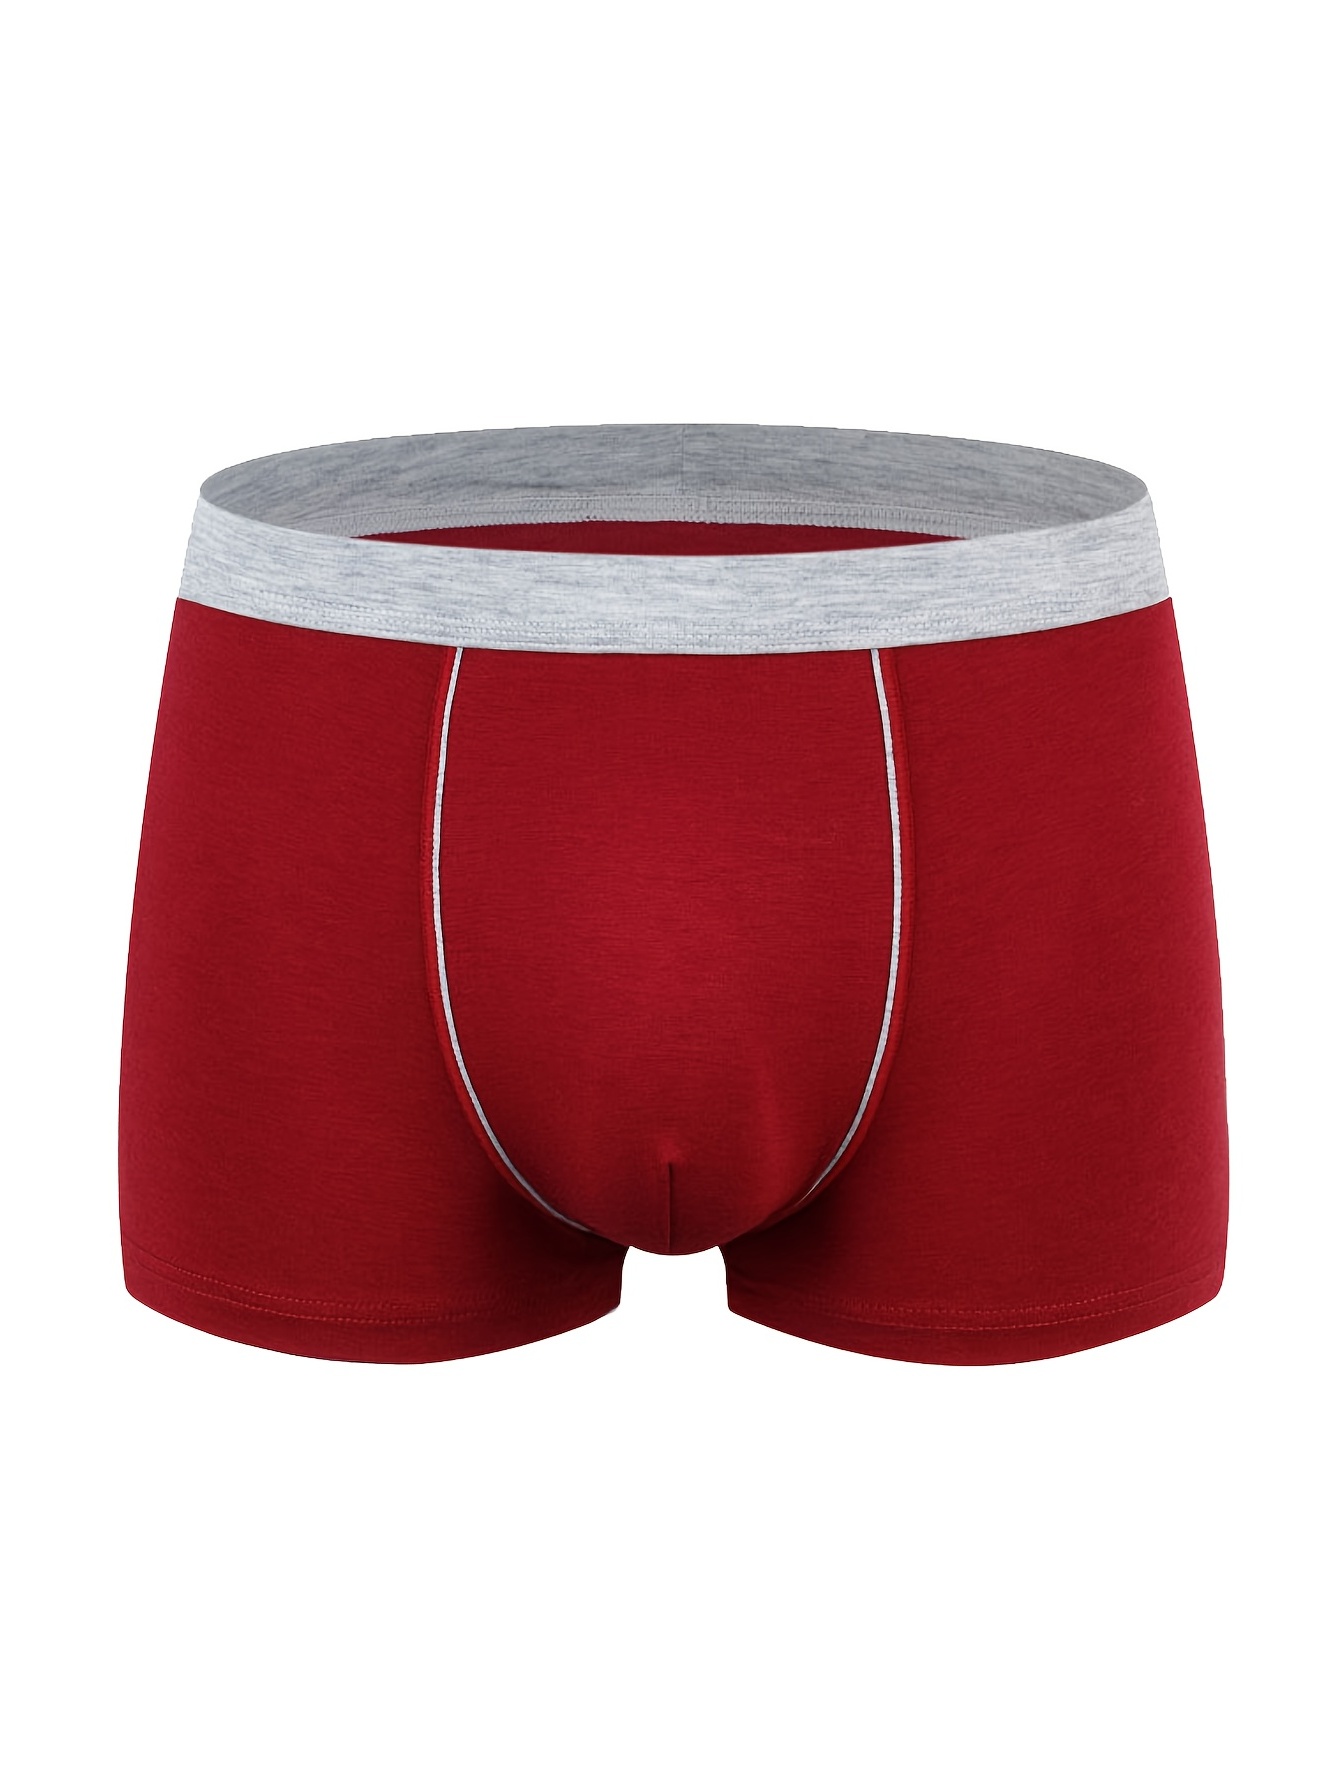 Men's Underwear Cotton Briefs Breathable Youth Underwear Plus Size Medium  Waist Triangle Boxing Underwear M-5XL Color: A13, Size: 5XL 105-125KG